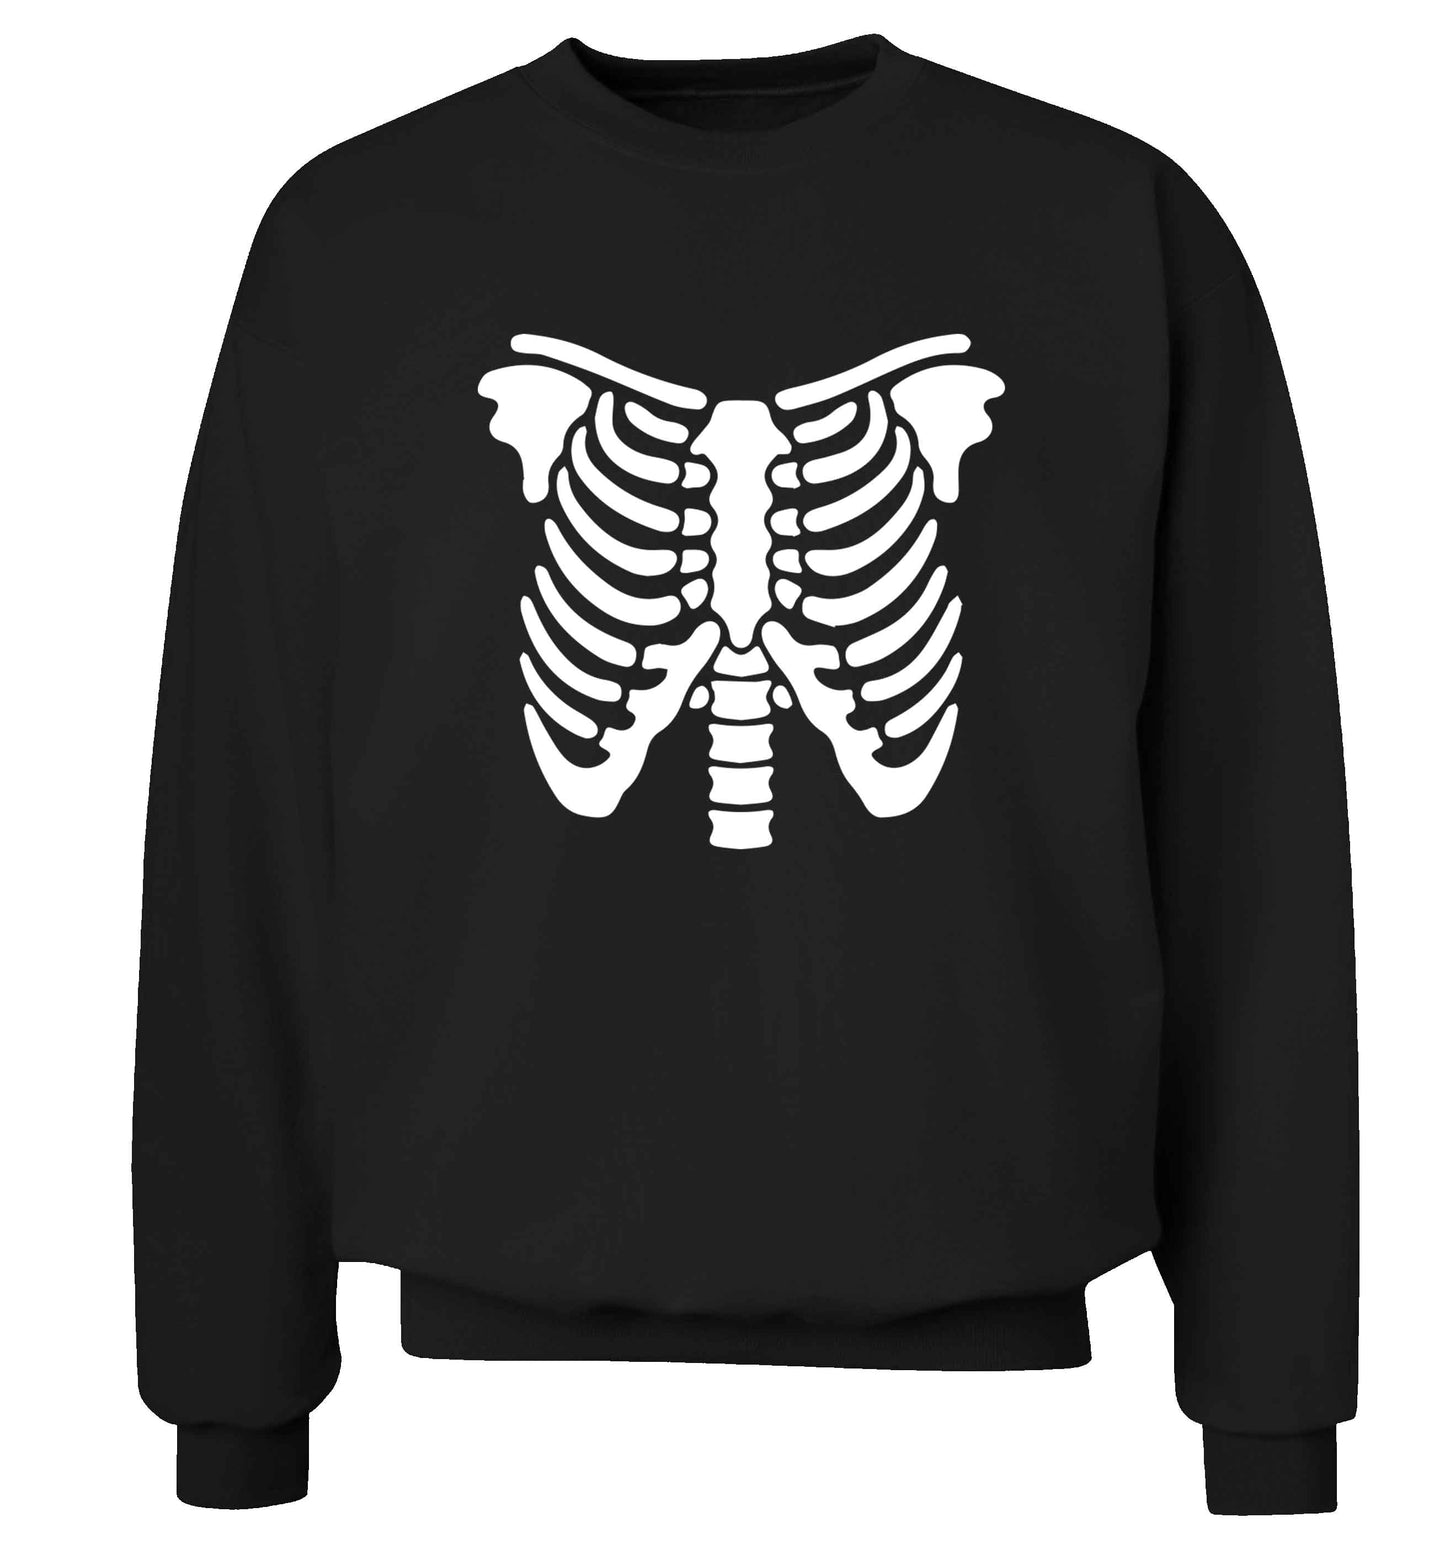 Skeleton ribcage adult's unisex black sweater 2XL